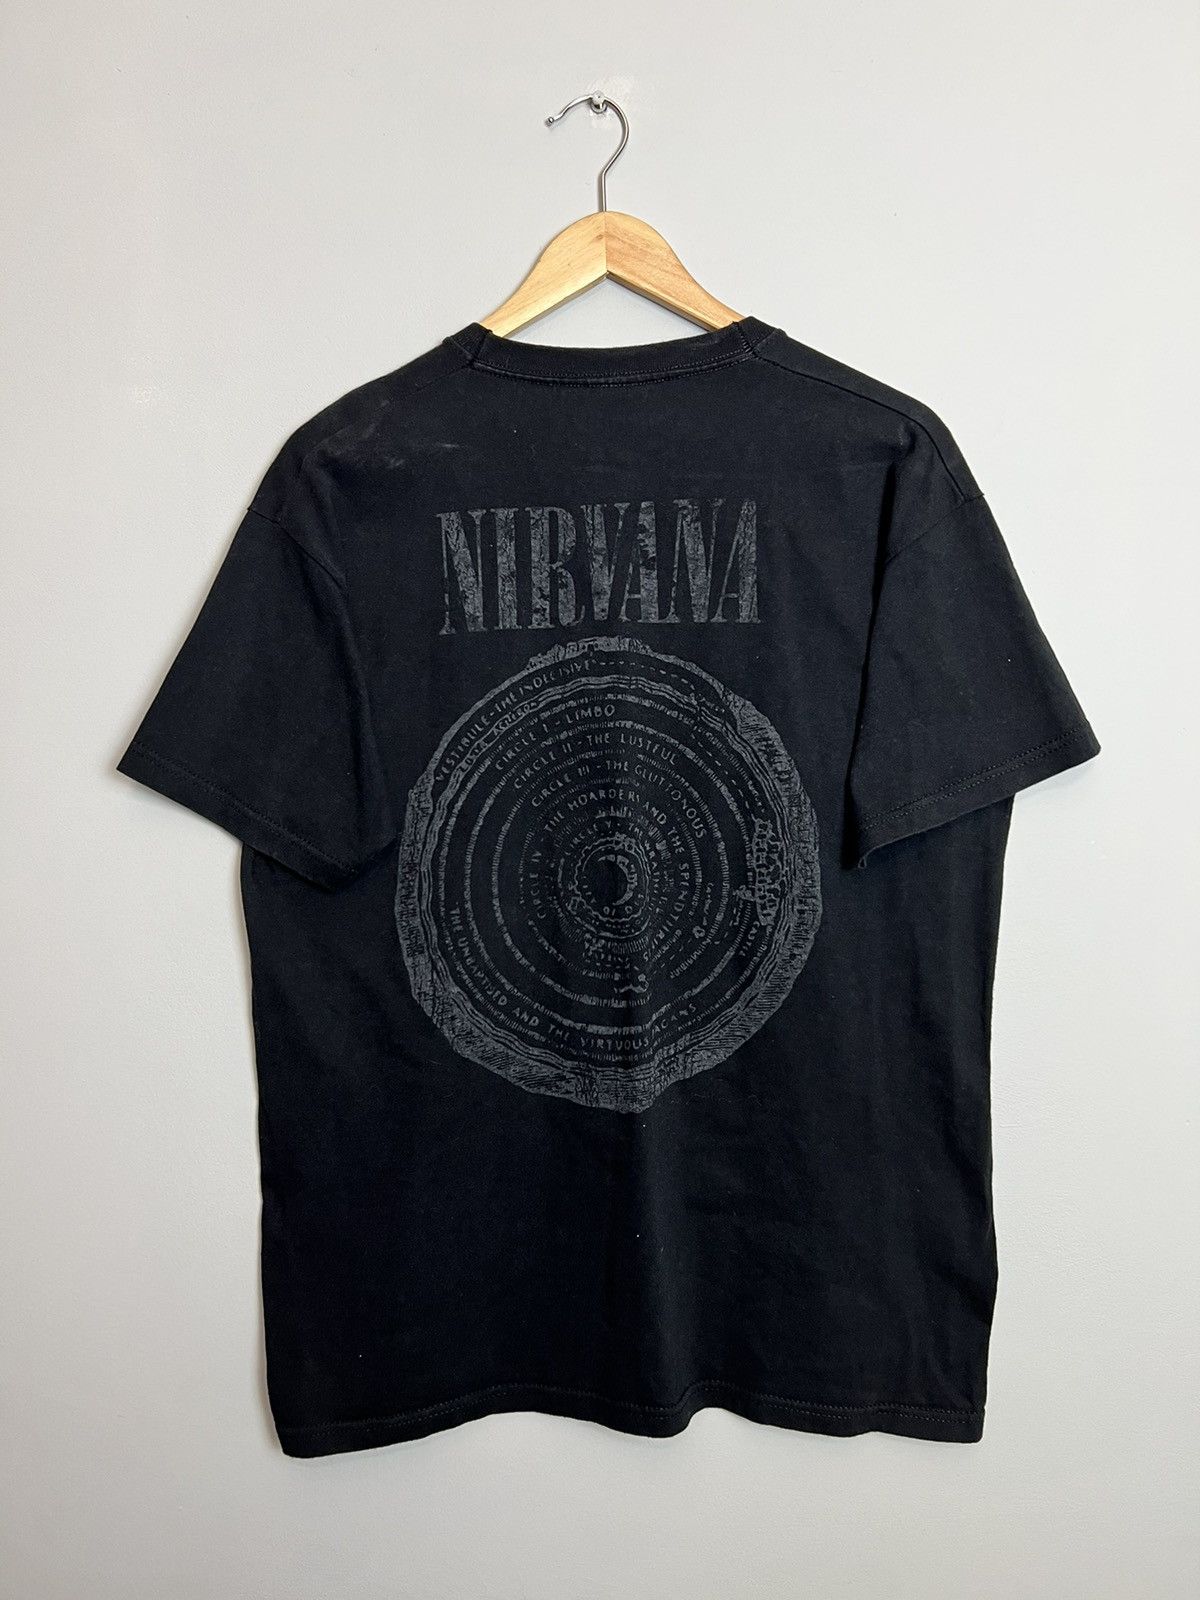 Vintage Rare Vintage Kurt Cobain 00s Vestibule Tshirt Nirvana Grunge Size US L / EU 52-54 / 3 - 2 Preview